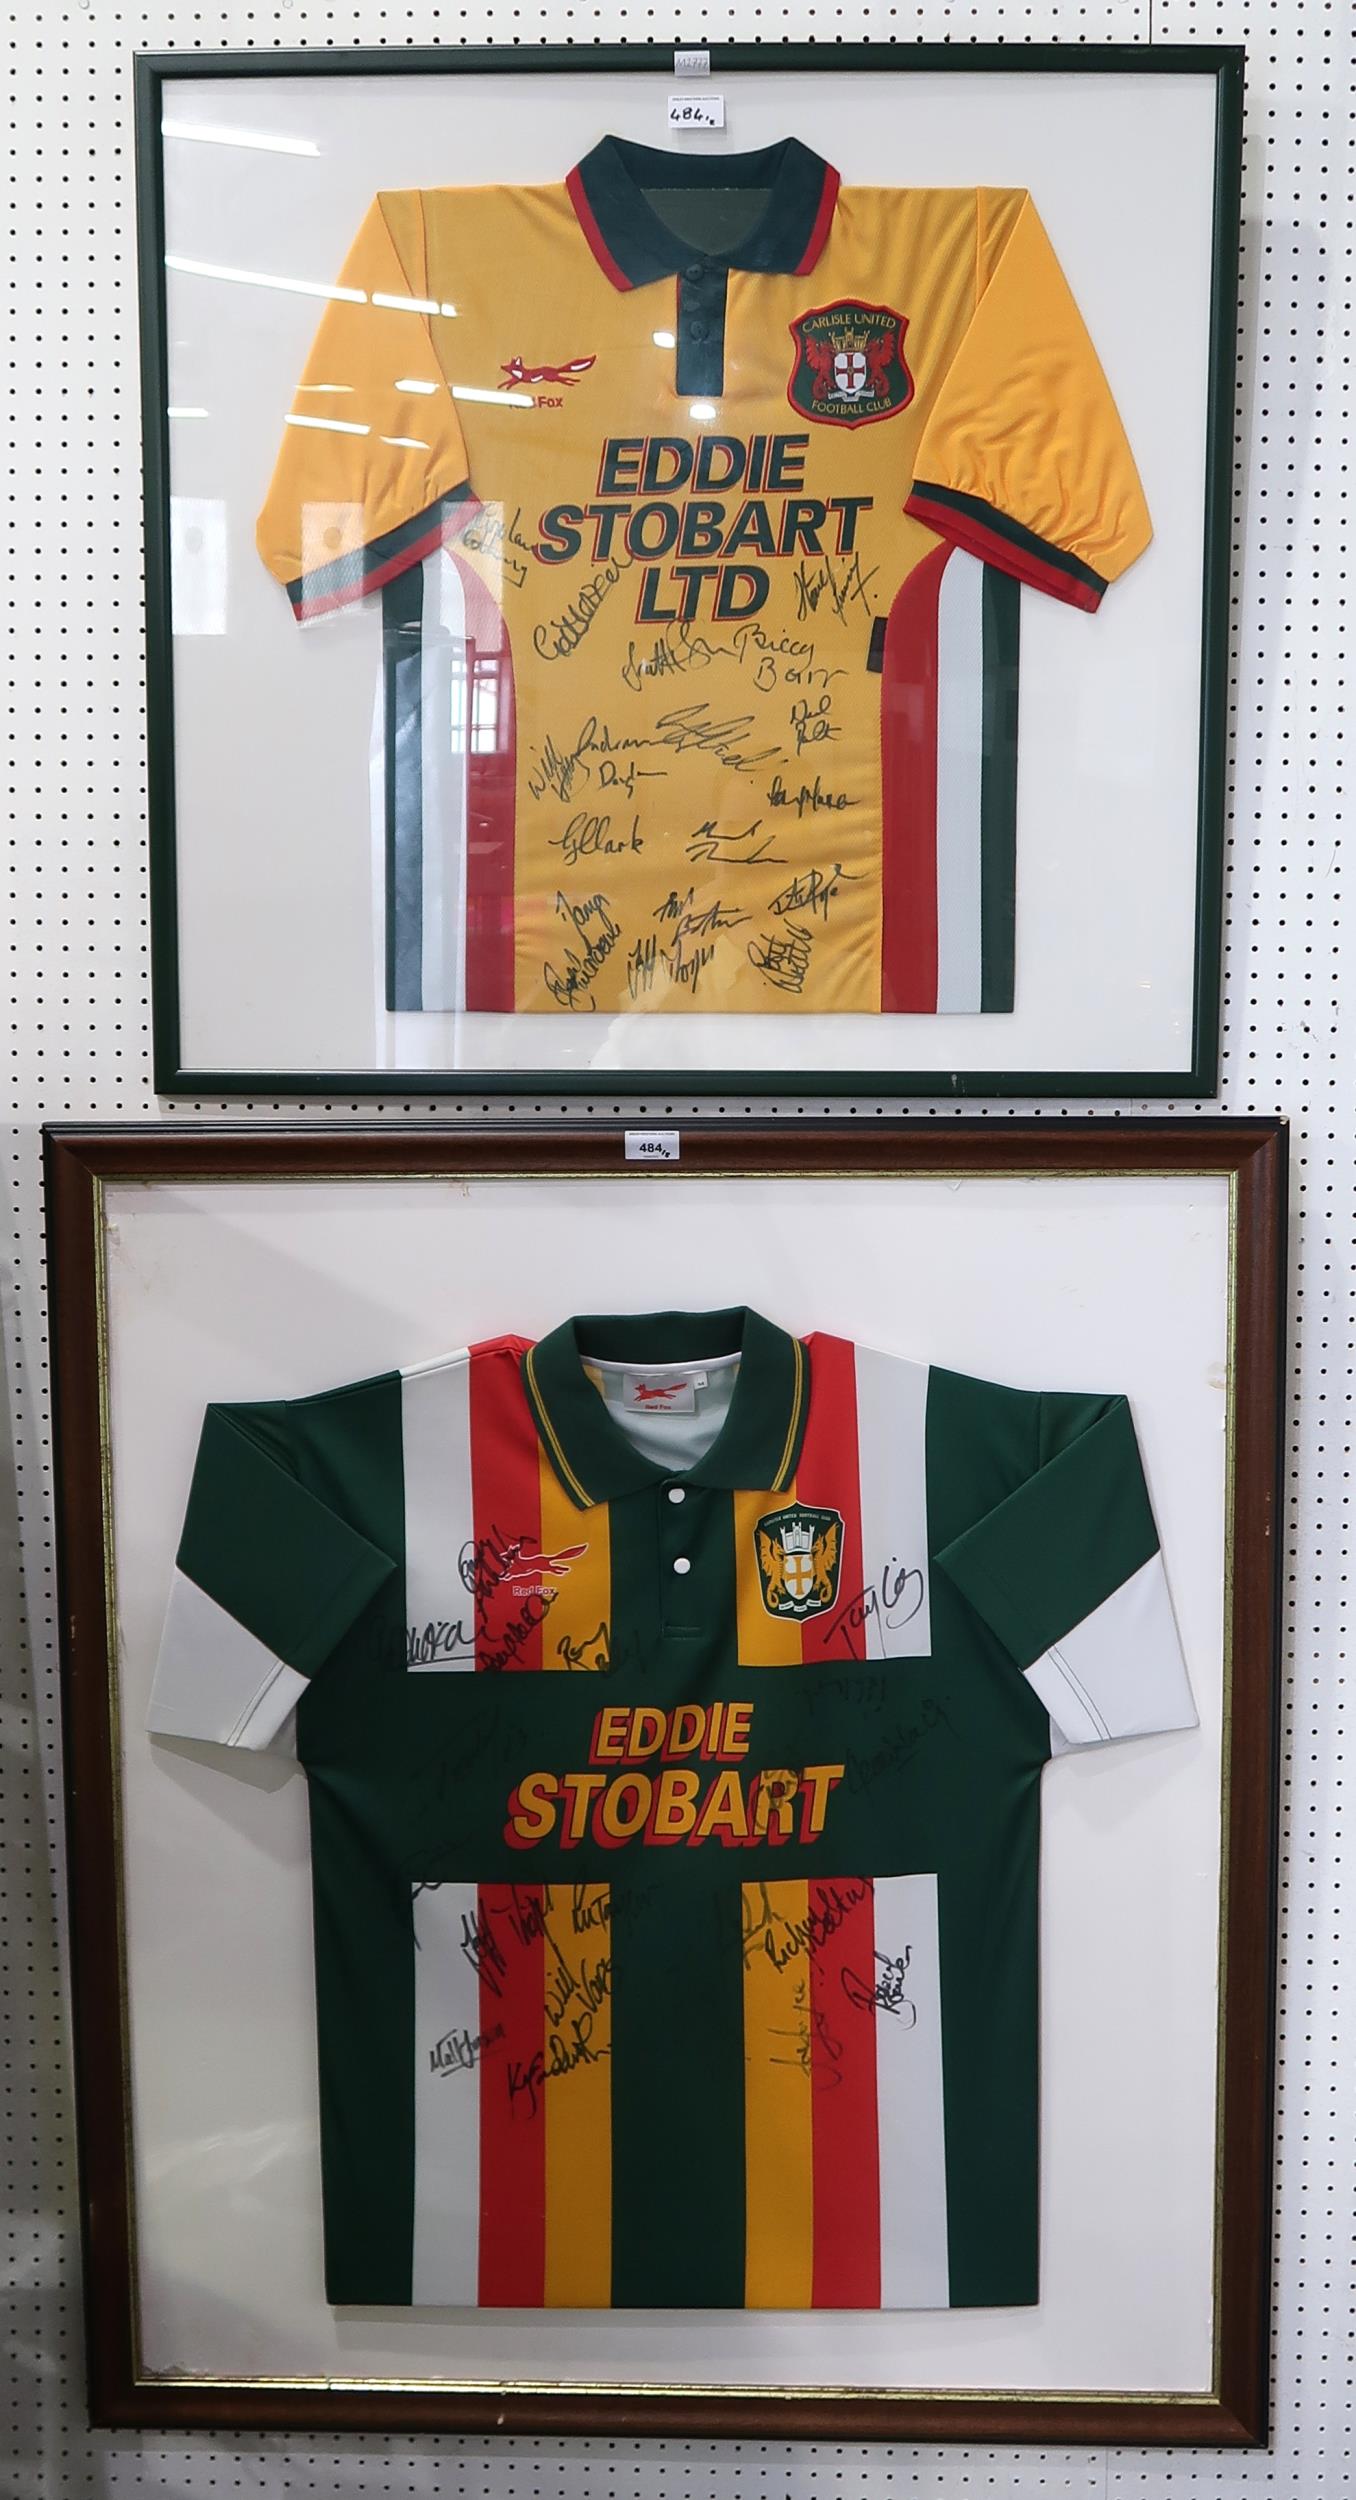 Two framed Carlisle United "Eddie Stobart" football shirts, both bearing team signatures (the larger